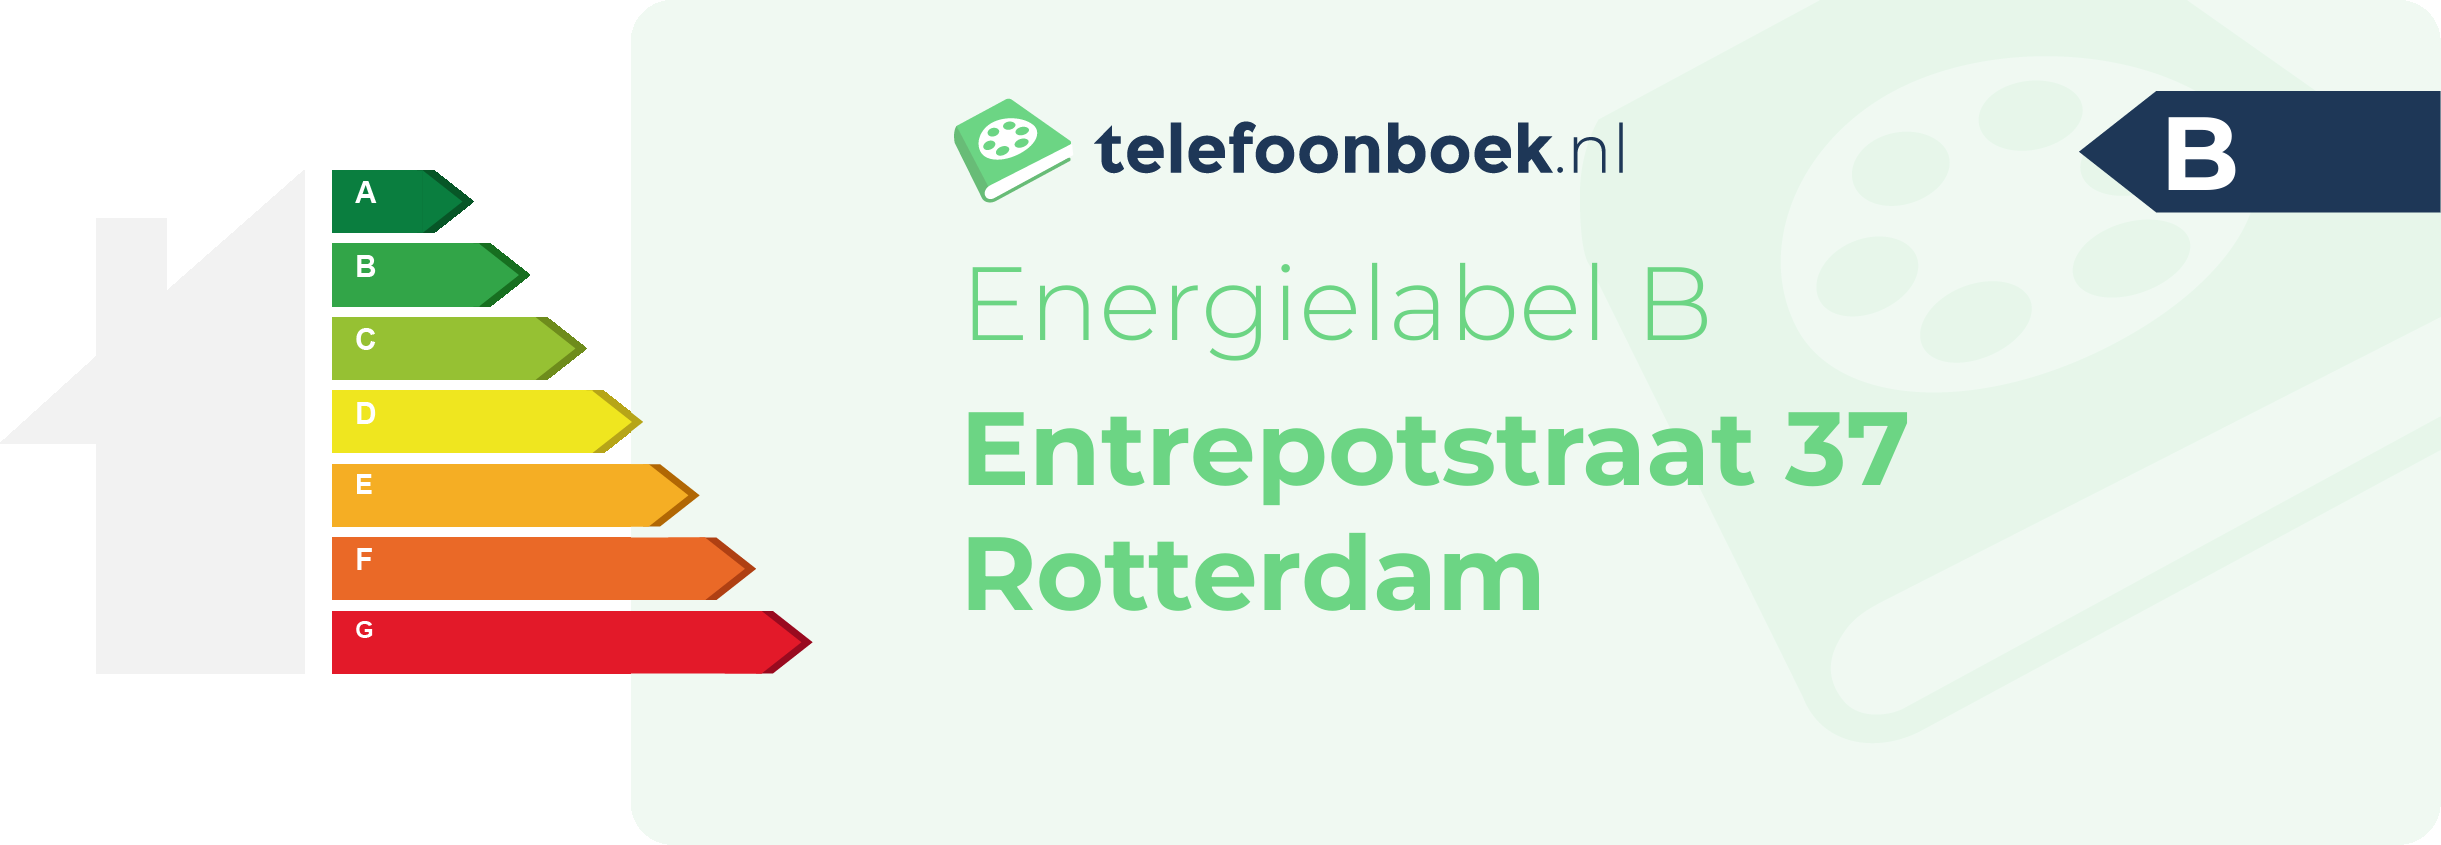 Energielabel Entrepotstraat 37 Rotterdam